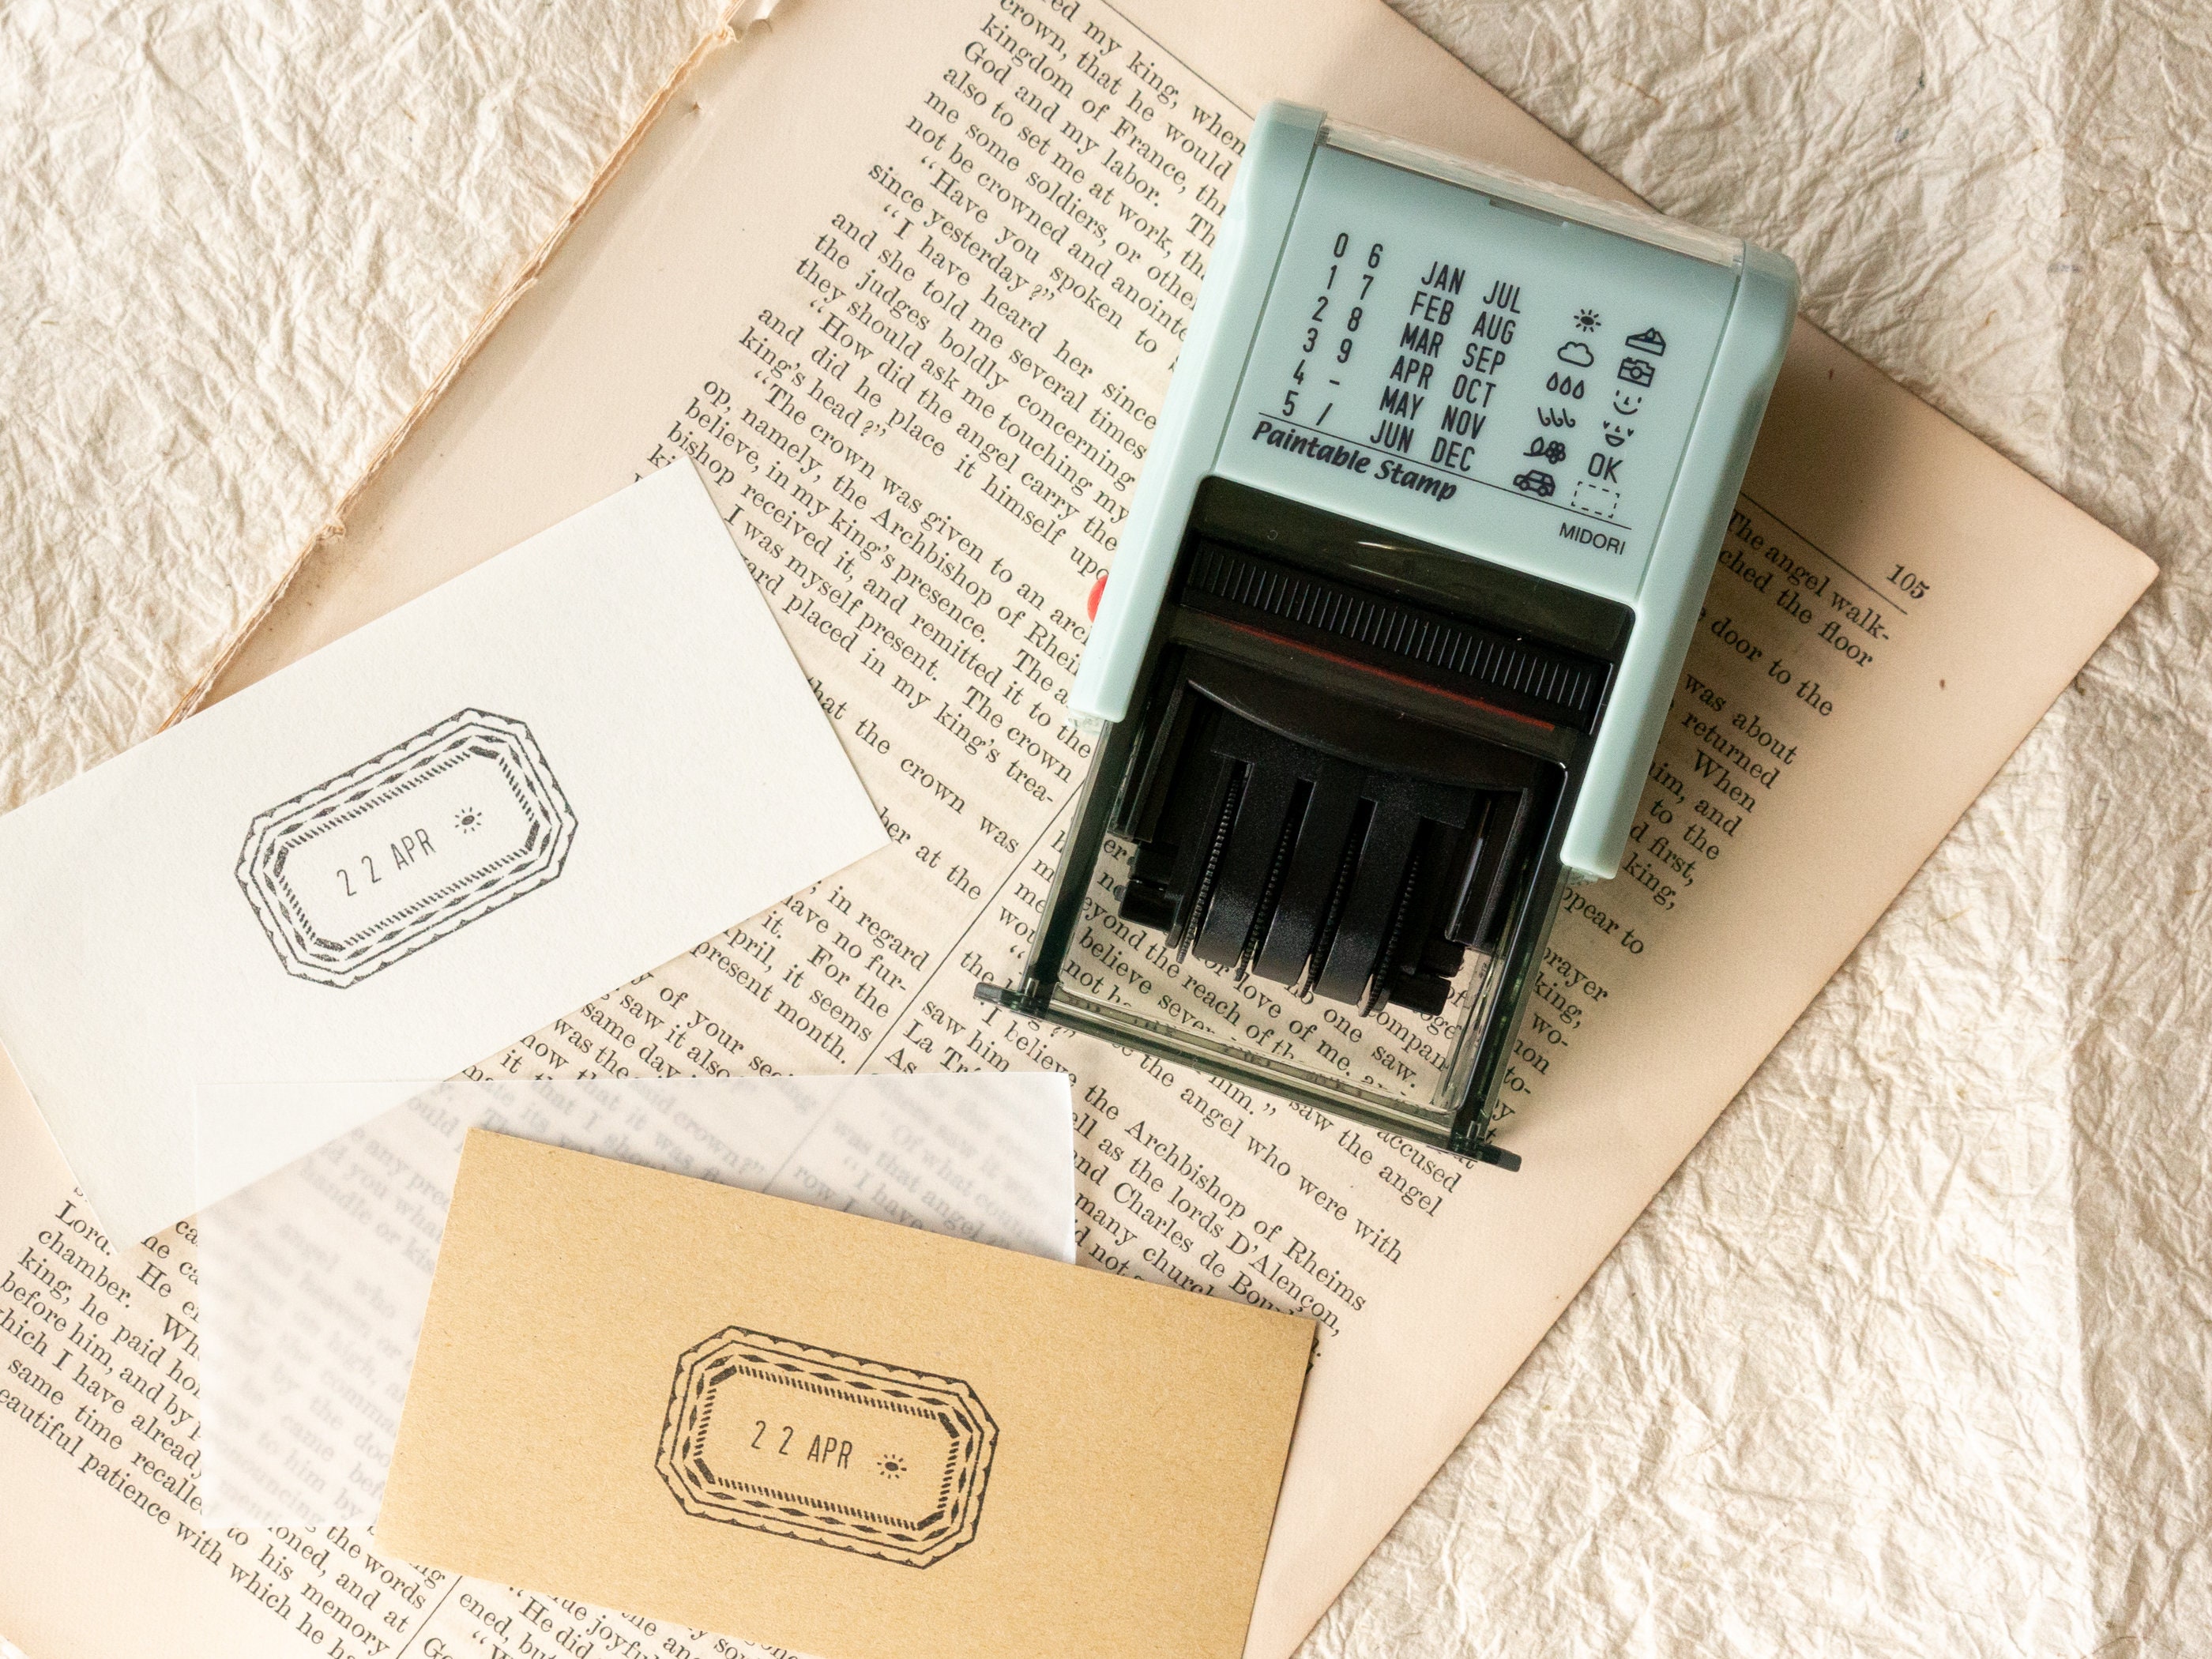 Midori Rotating Paintable Stamp - Daily Record